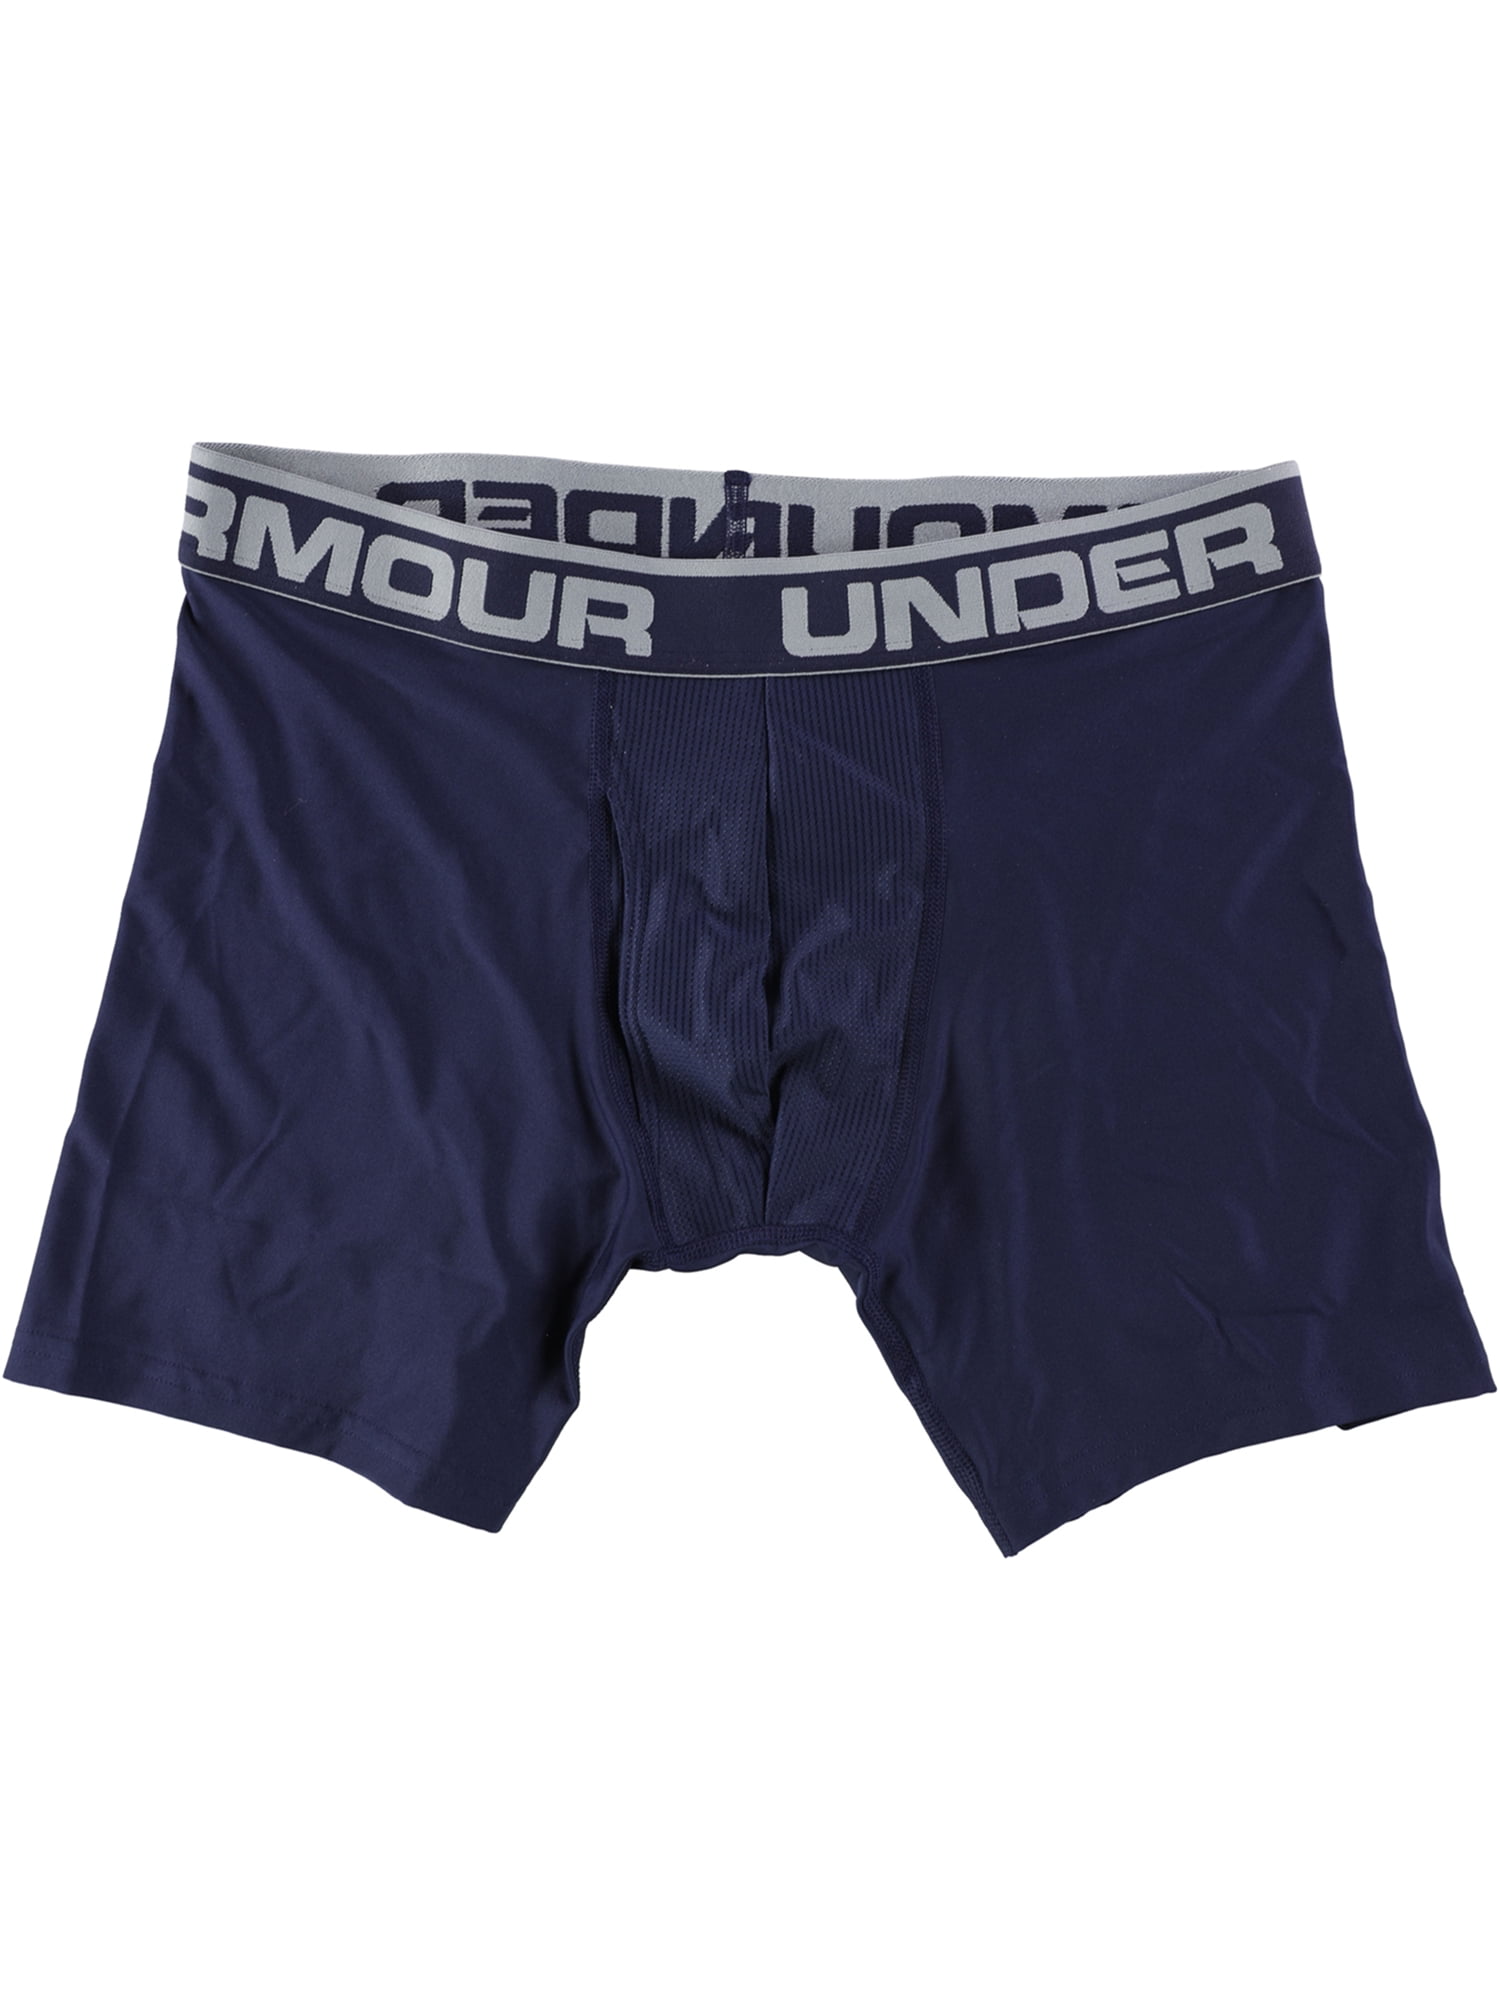 Under Armour Mens UA Original Underwear 